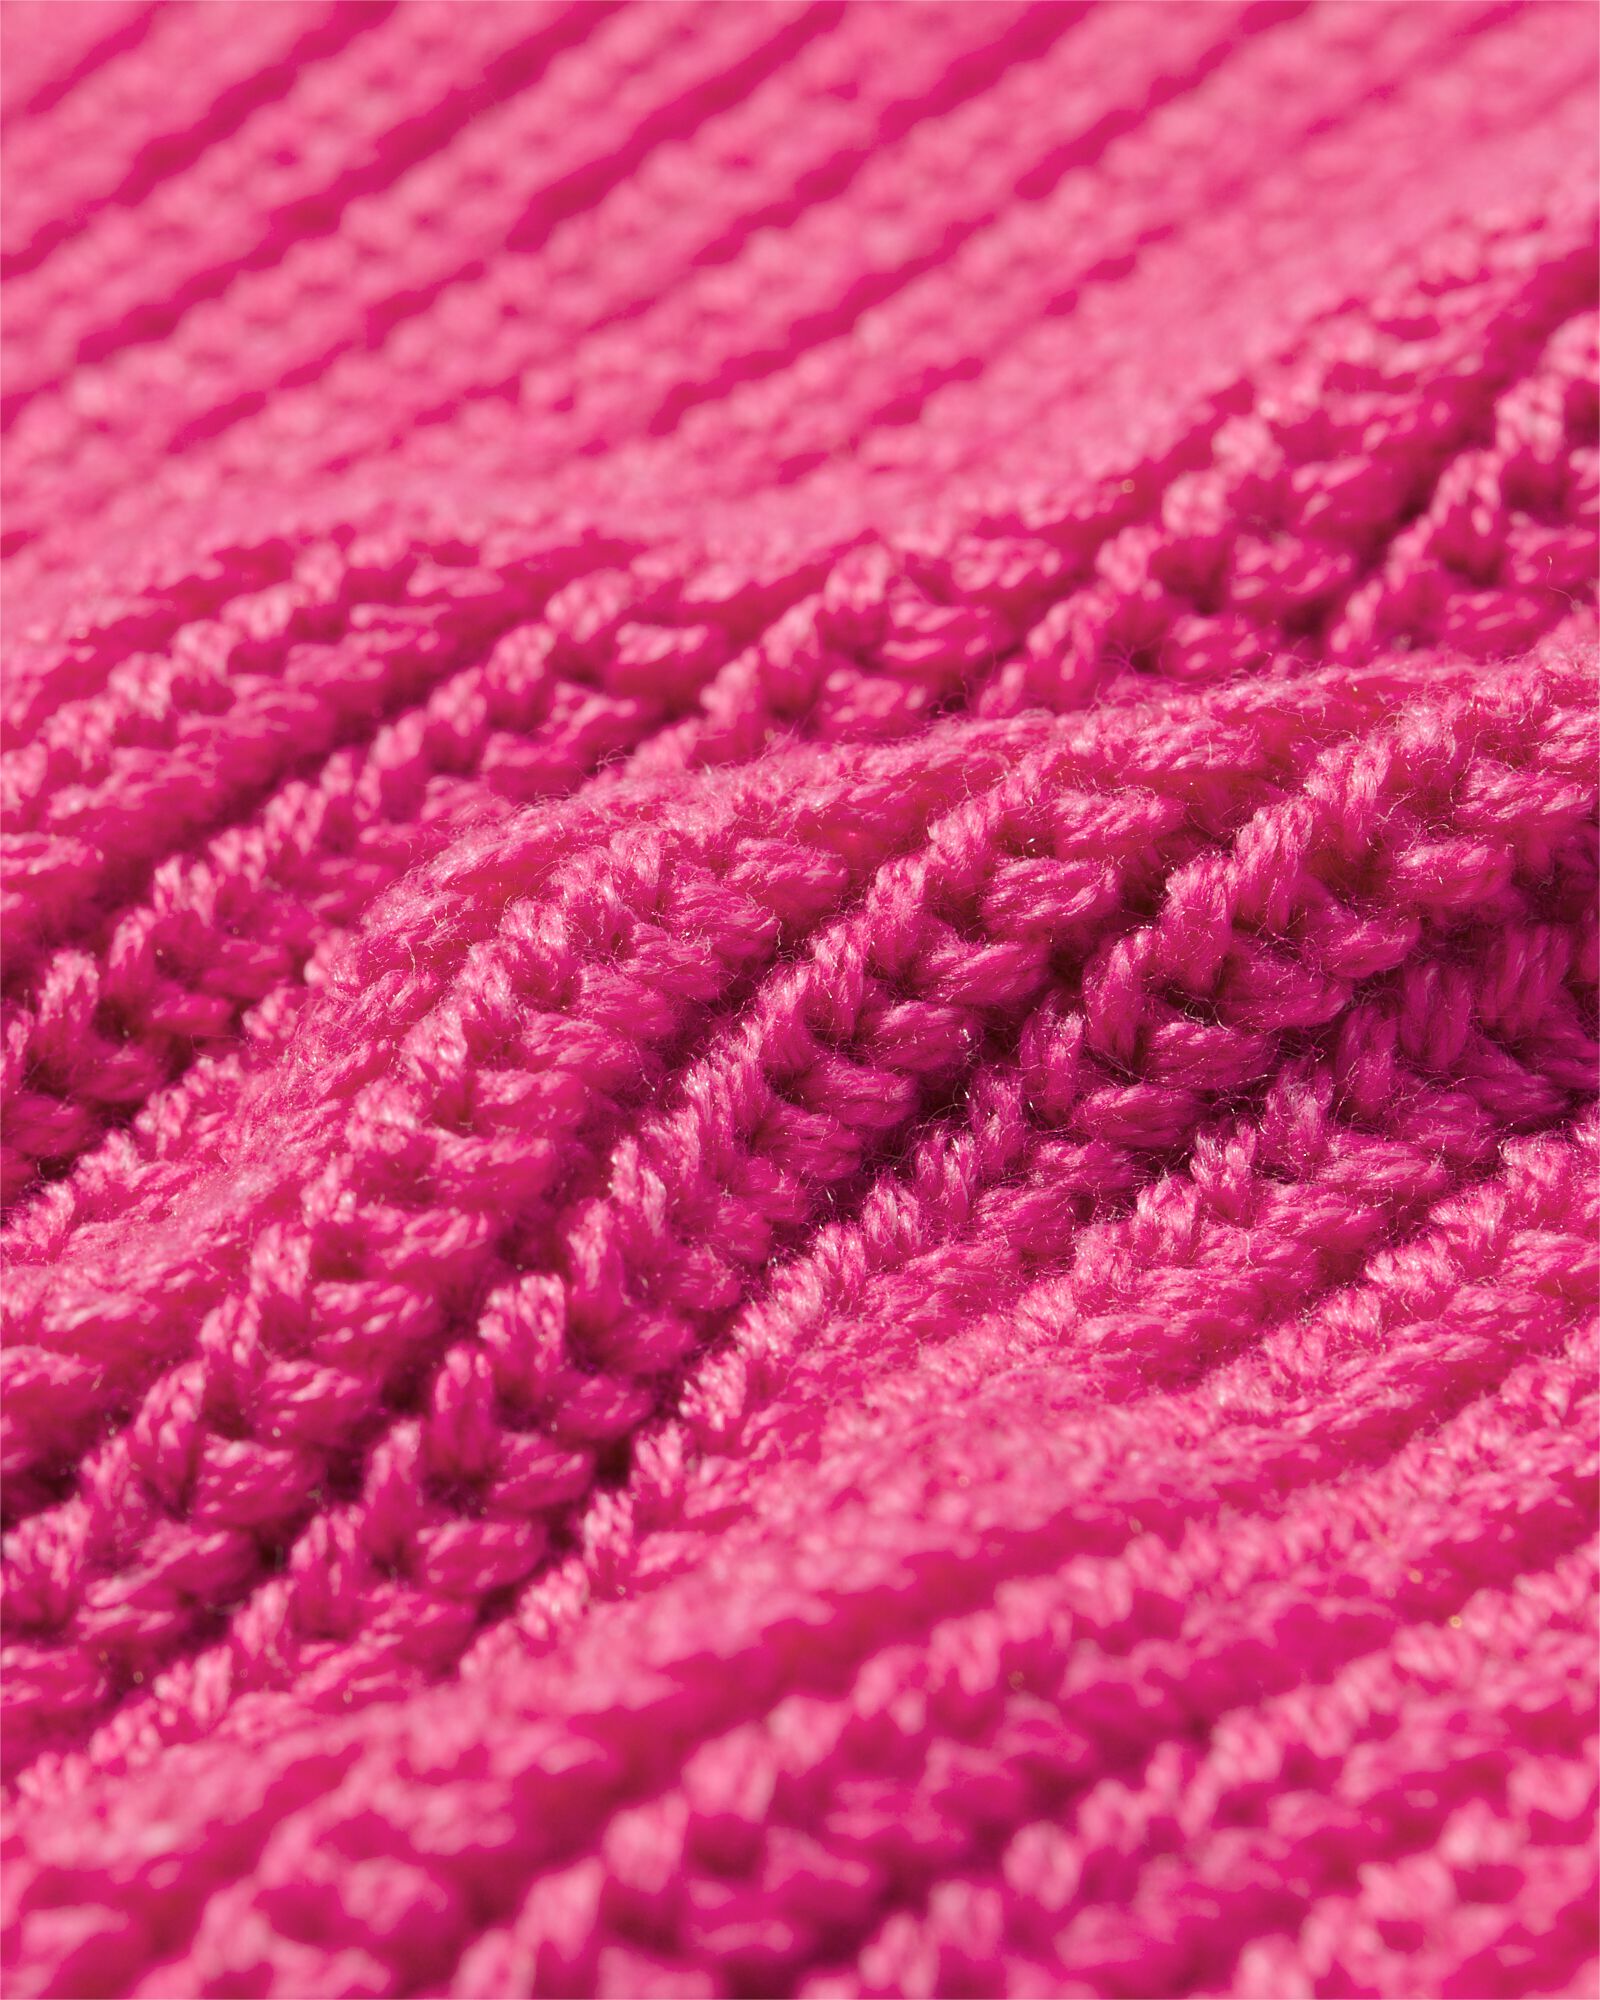 baby trui ajour gebreid roze roze - 33007050PINK - HEMA